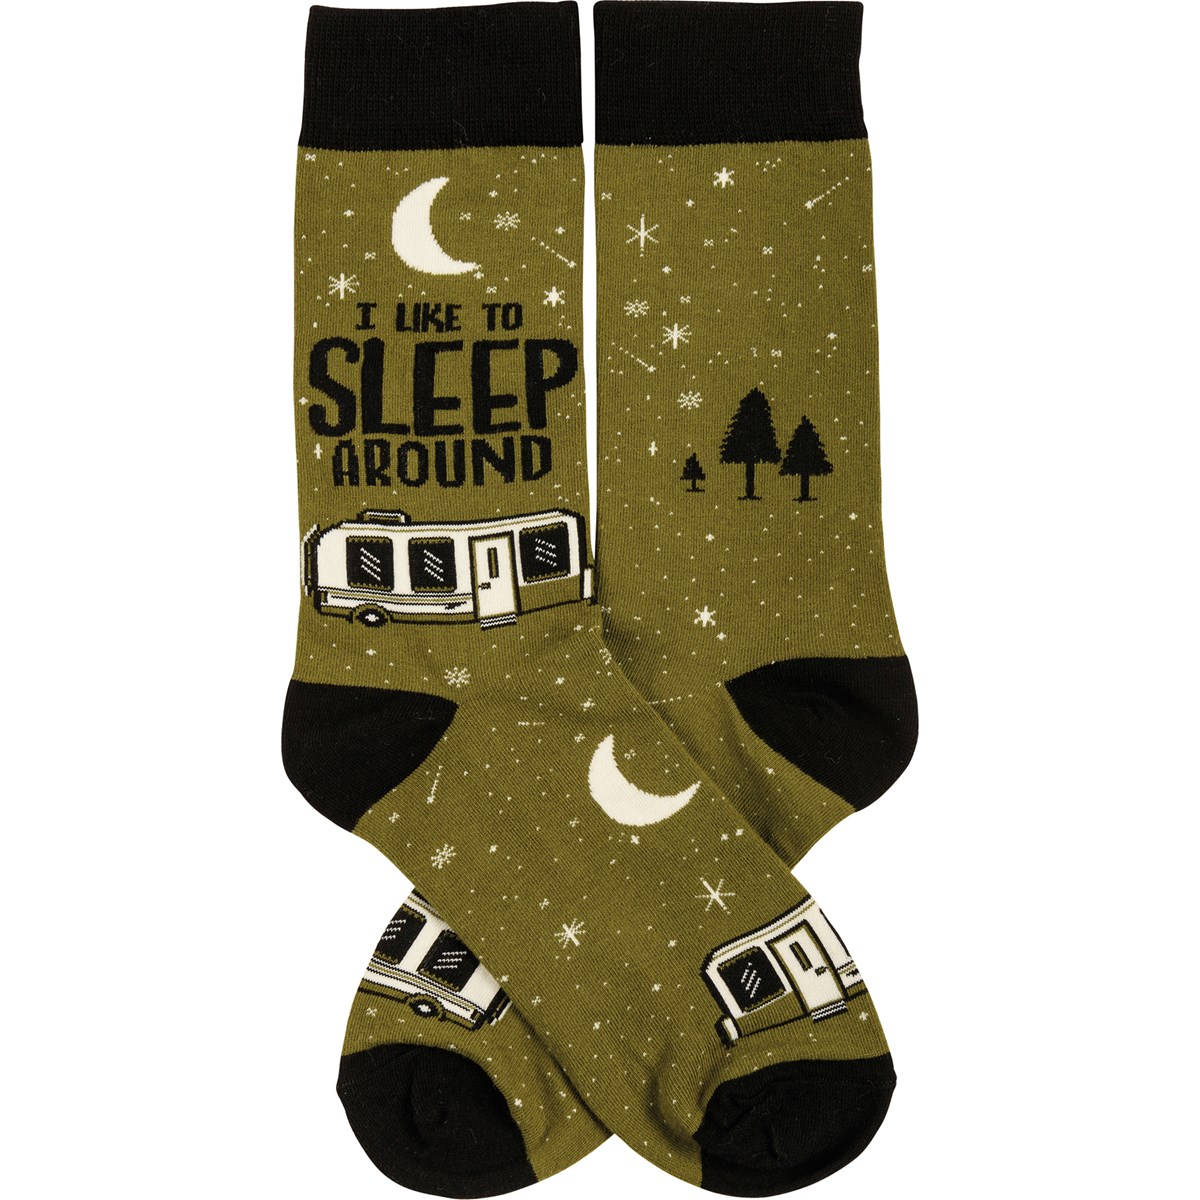 Socks - I Like To Sleep Around - One Size Fits Most - Cotton, Nylon, Spandex